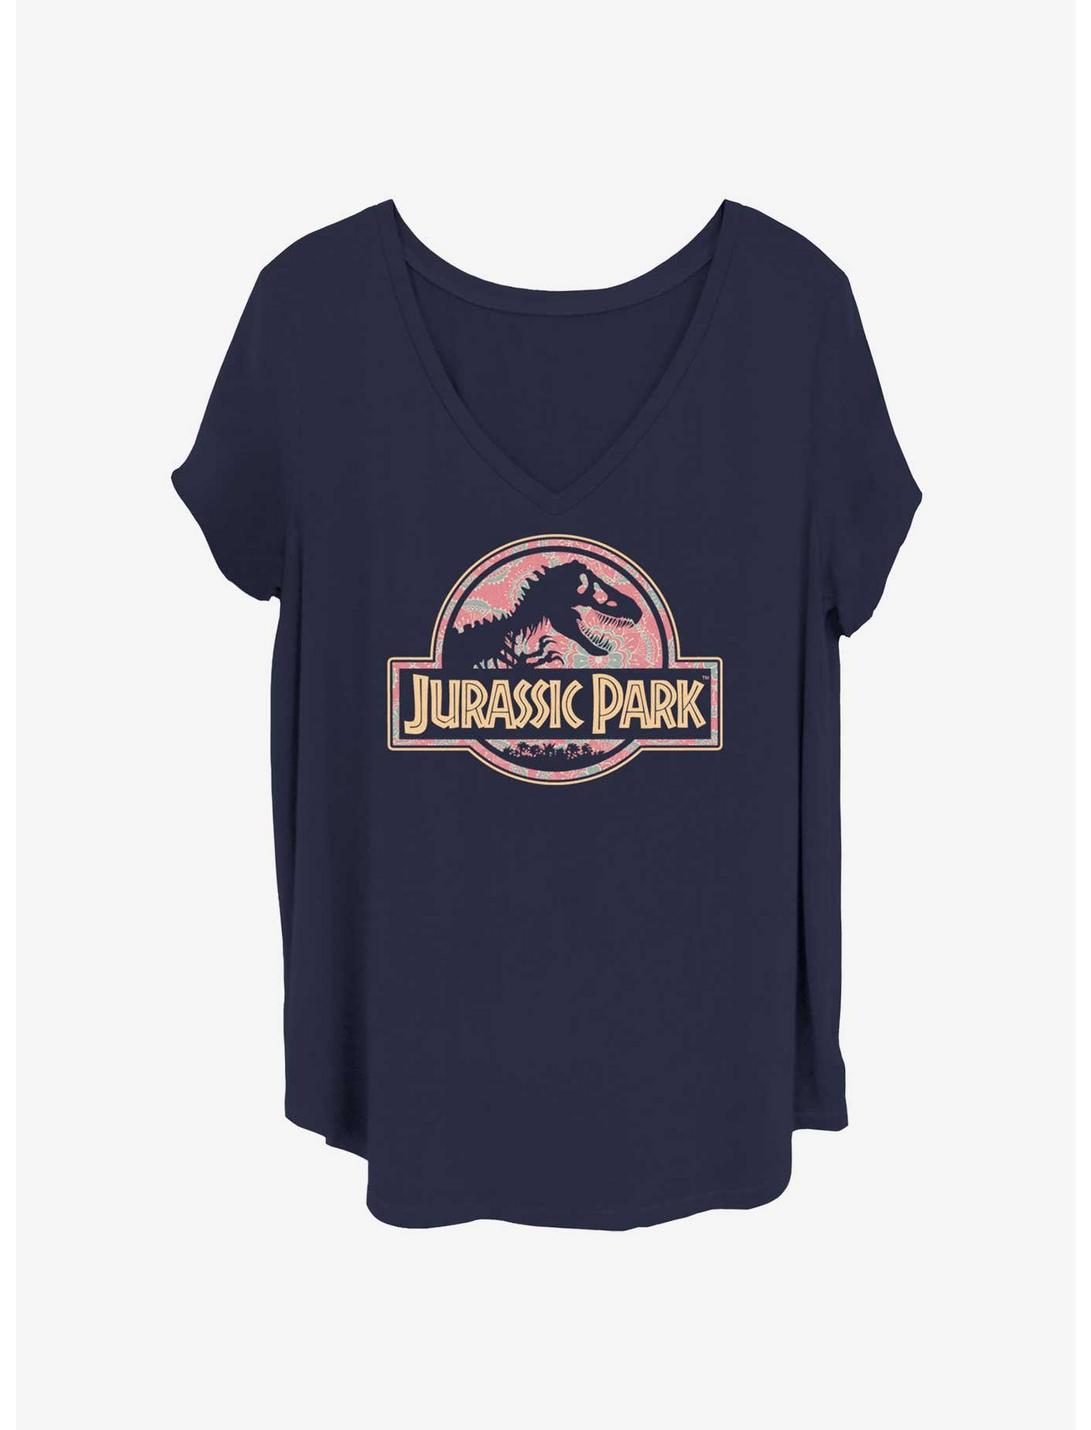 Jurassic Park Desert Park Womens T-Shirt Plus Size, NAVY, hi-res